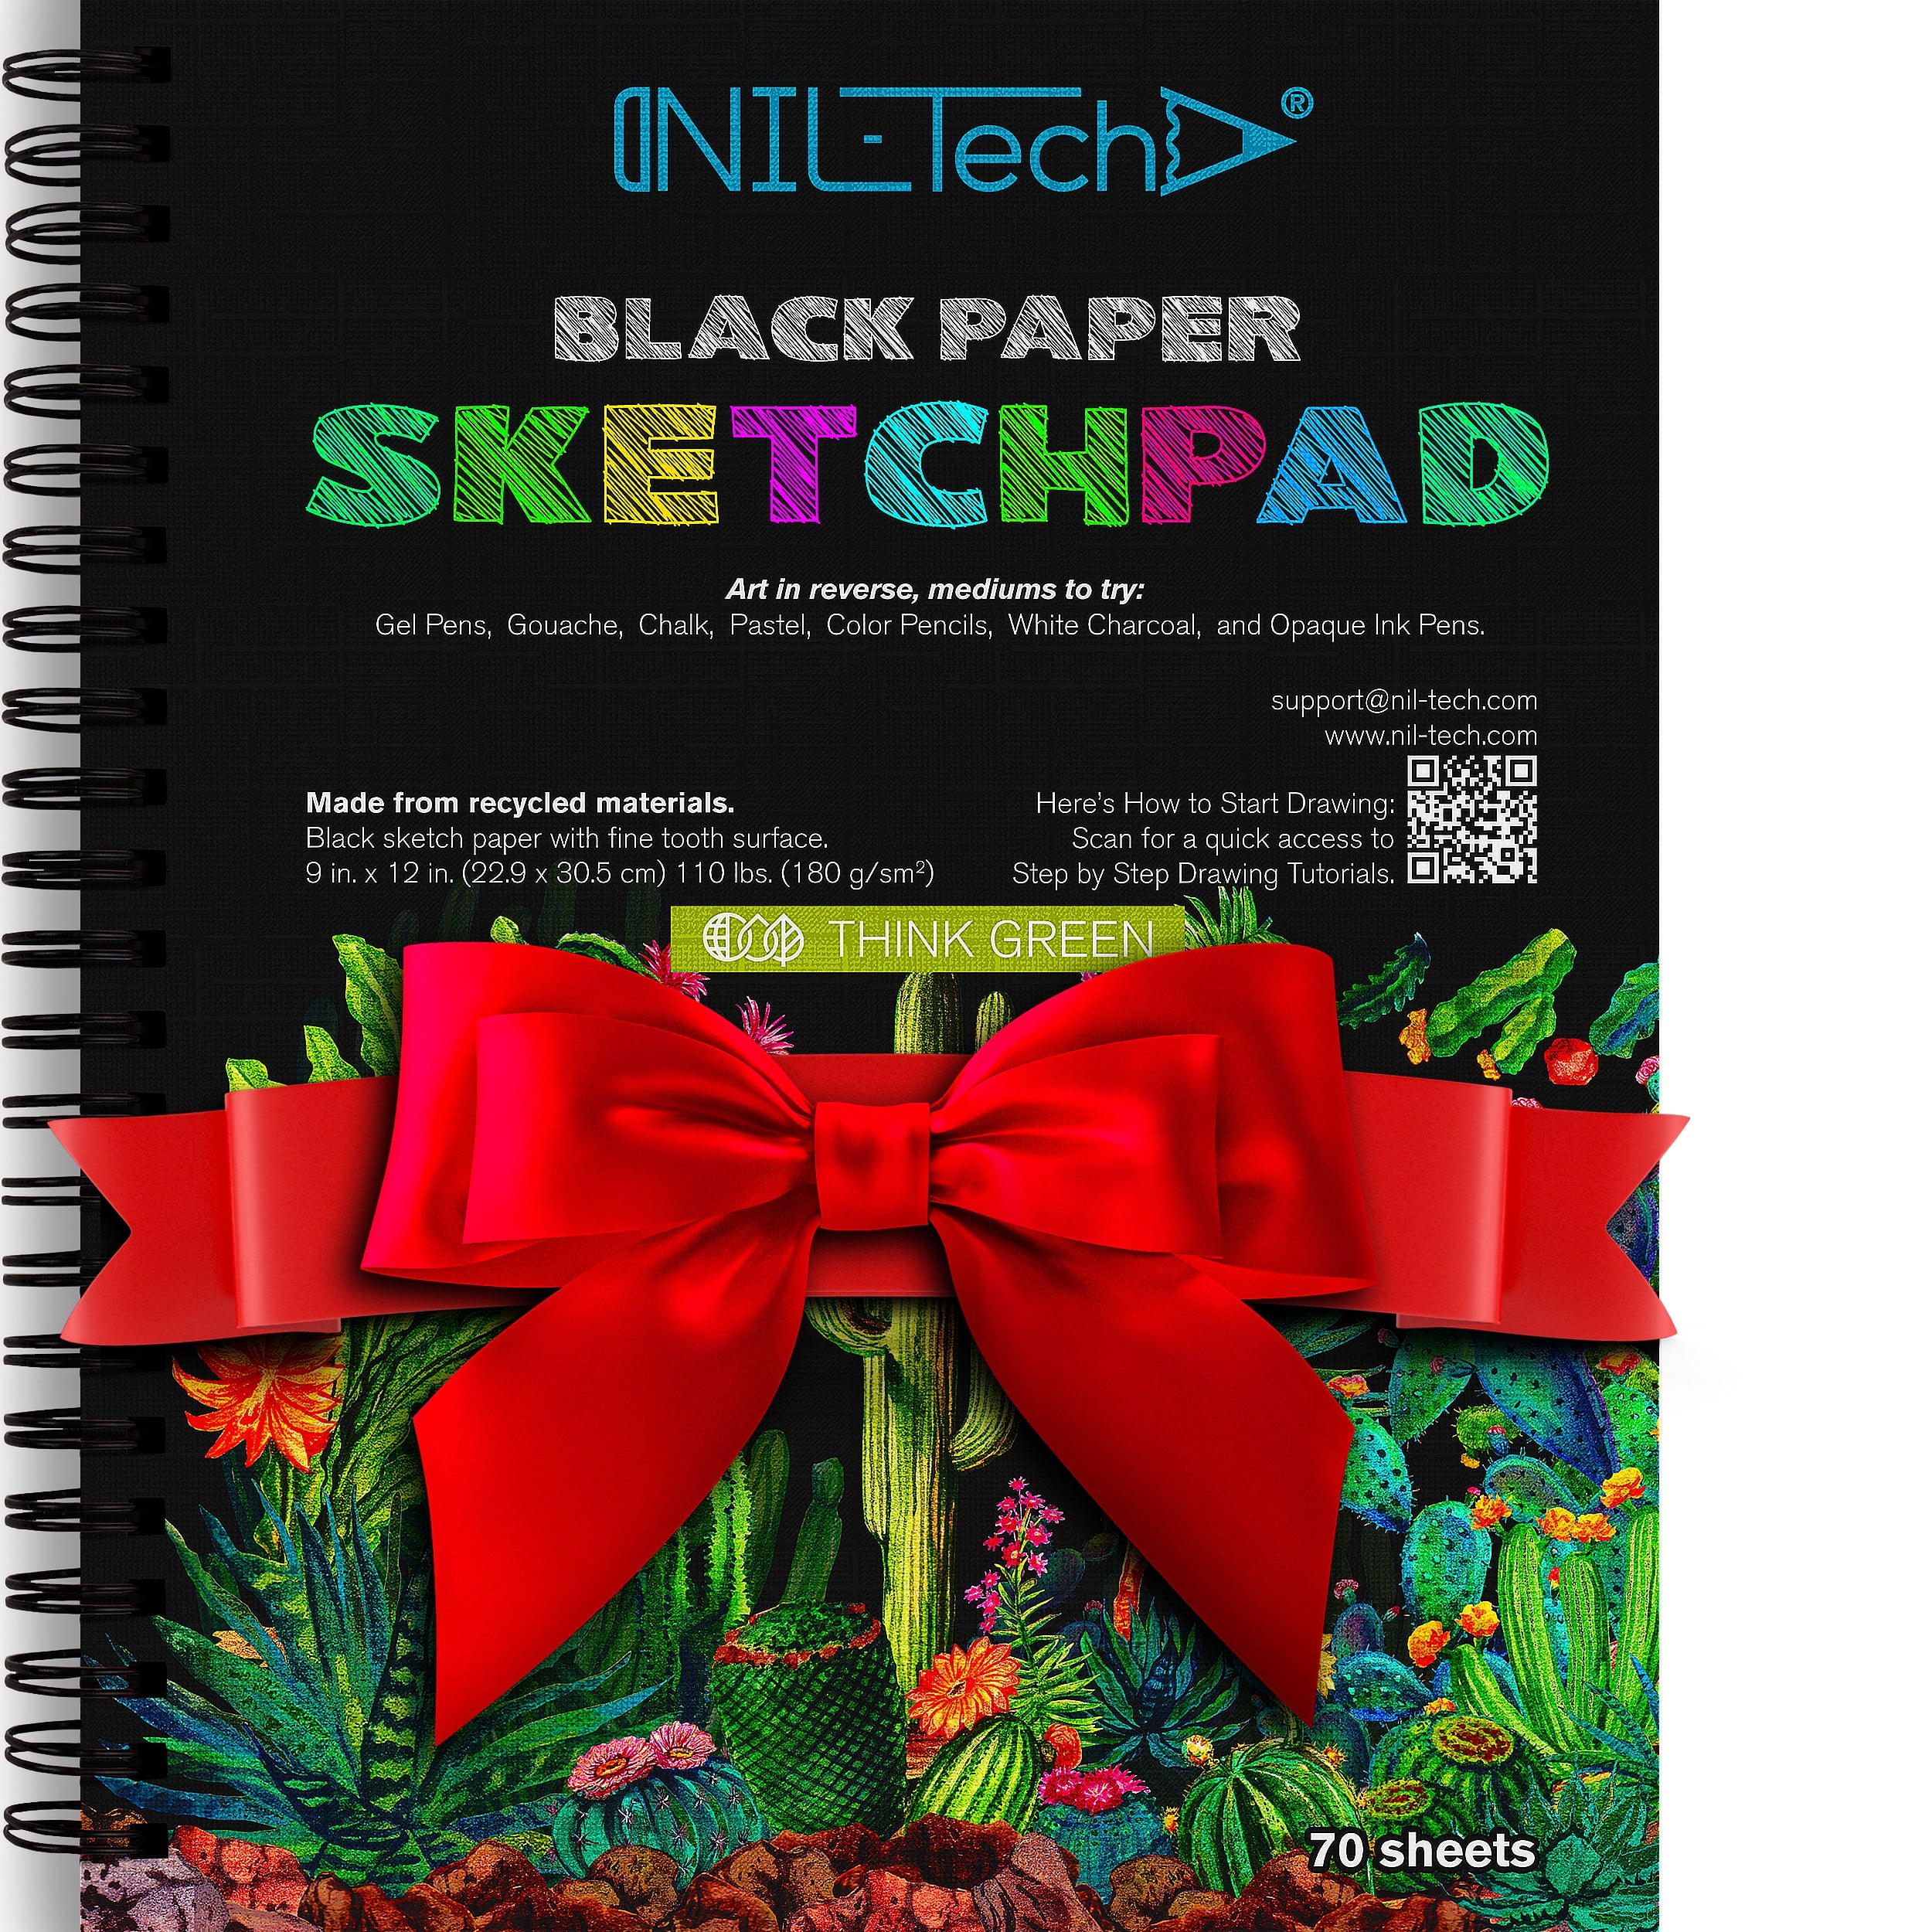 Pasler 9X12 Black Sketch Pad,2 Pack 100 Sheets (92lb./150gsm